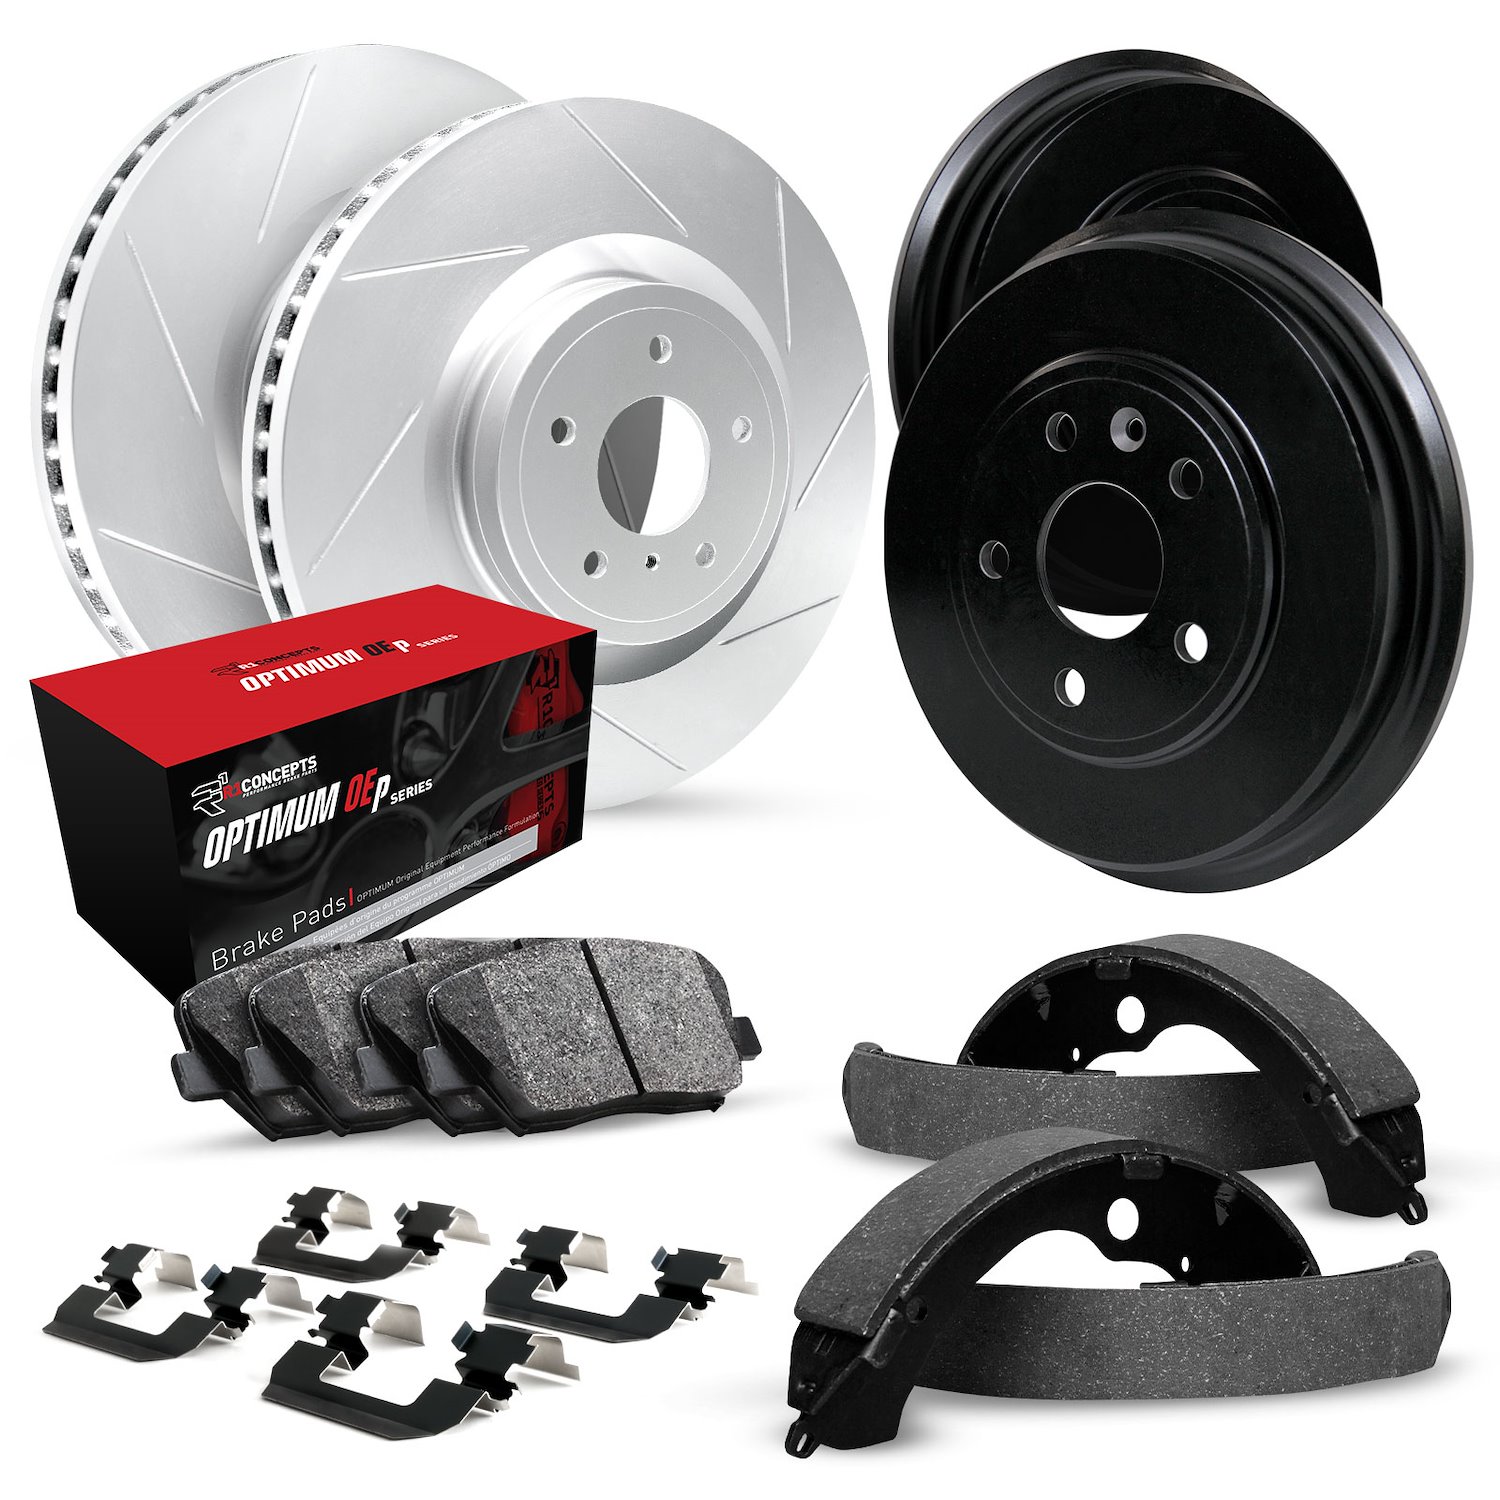 GEO-Carbon Slotted Brake Rotor & Drum Set w/Optimum OE Pads, Shoes, & Hardware, 2014-2018 Lexus/Toyota/Scion